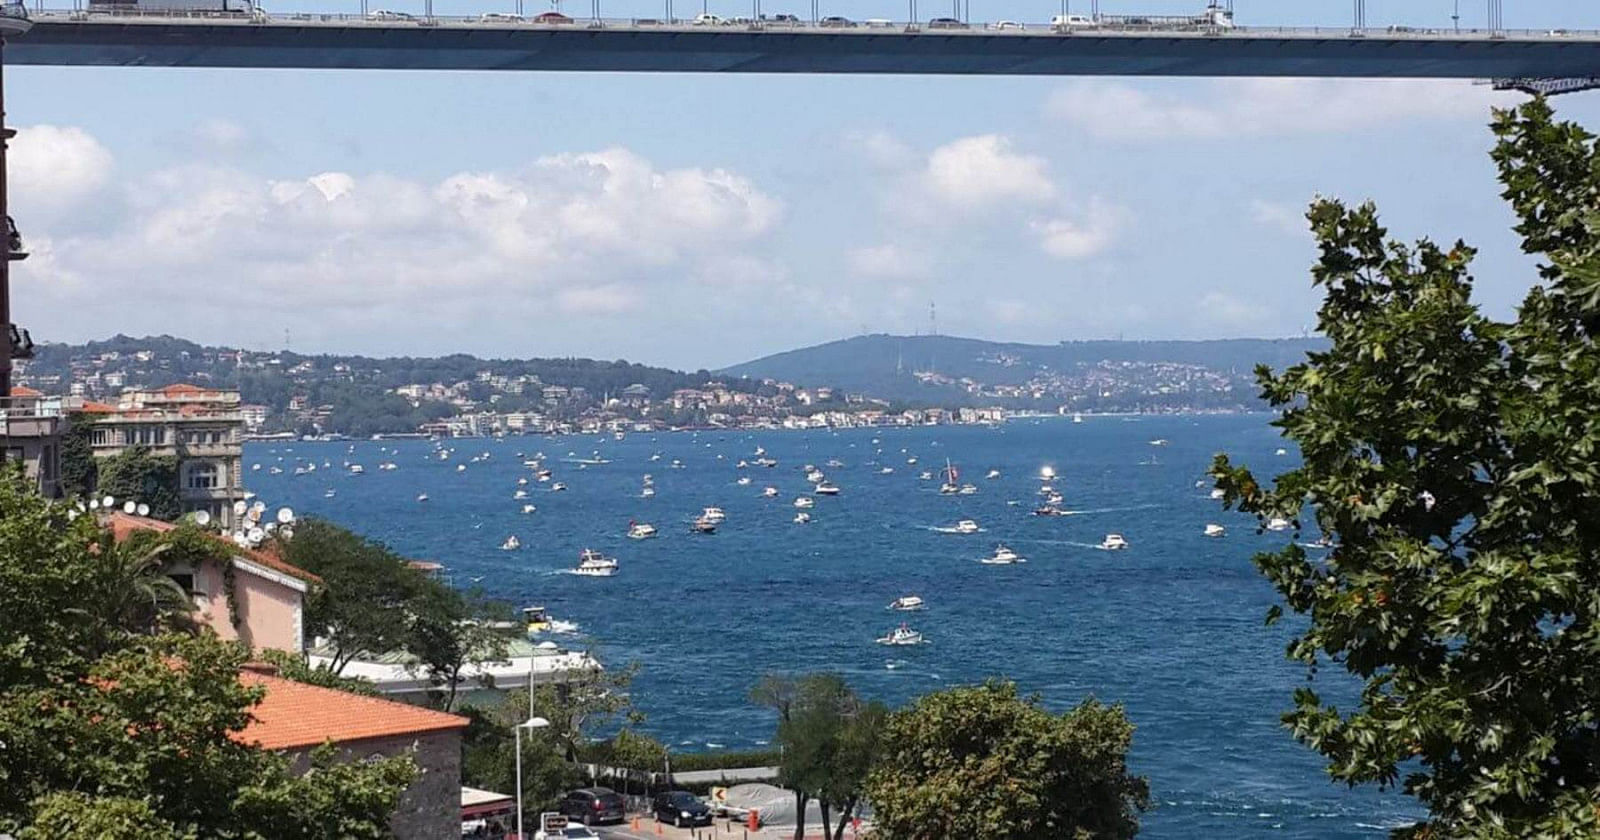 Unajmite brod u İstanbul